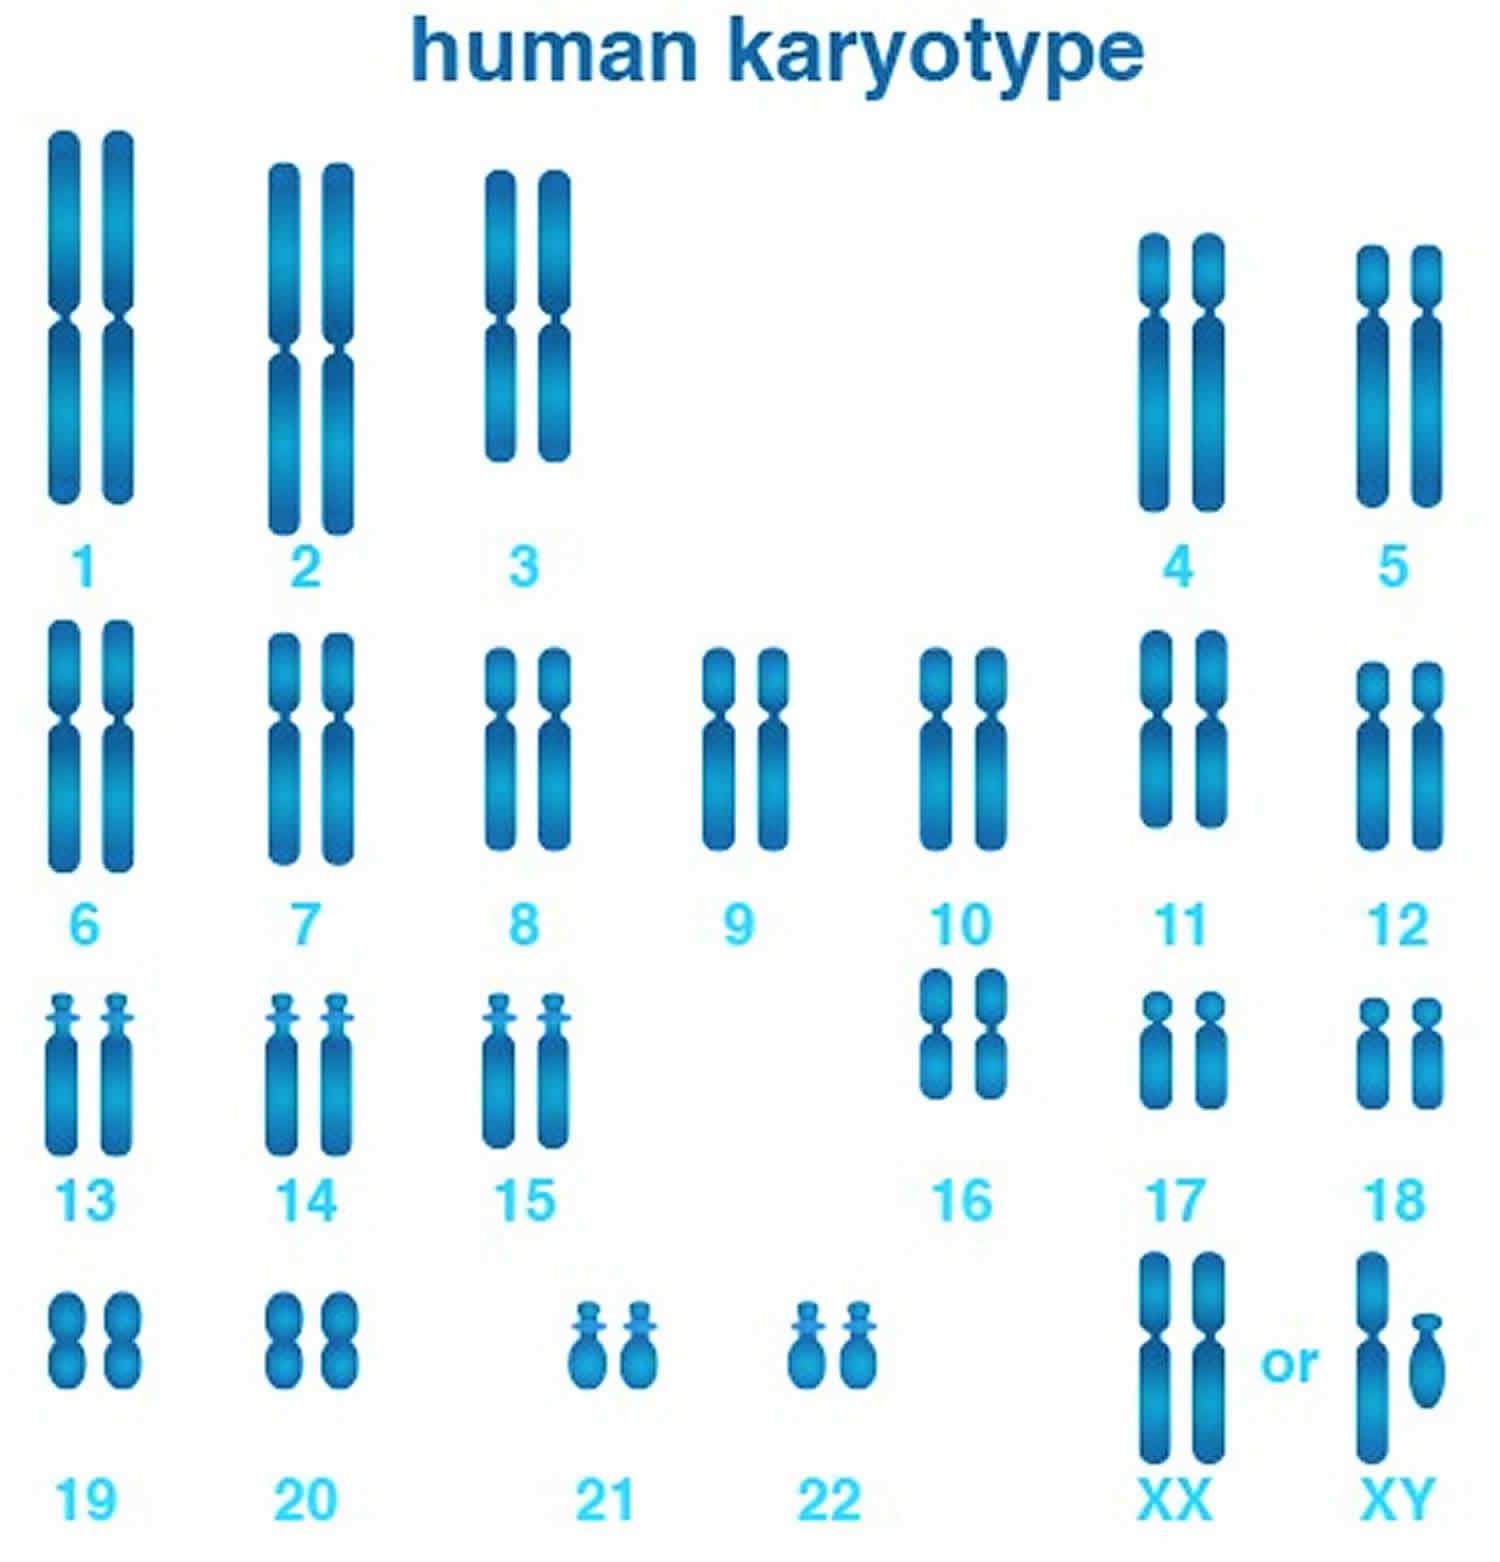 Human-karyotype.jpg